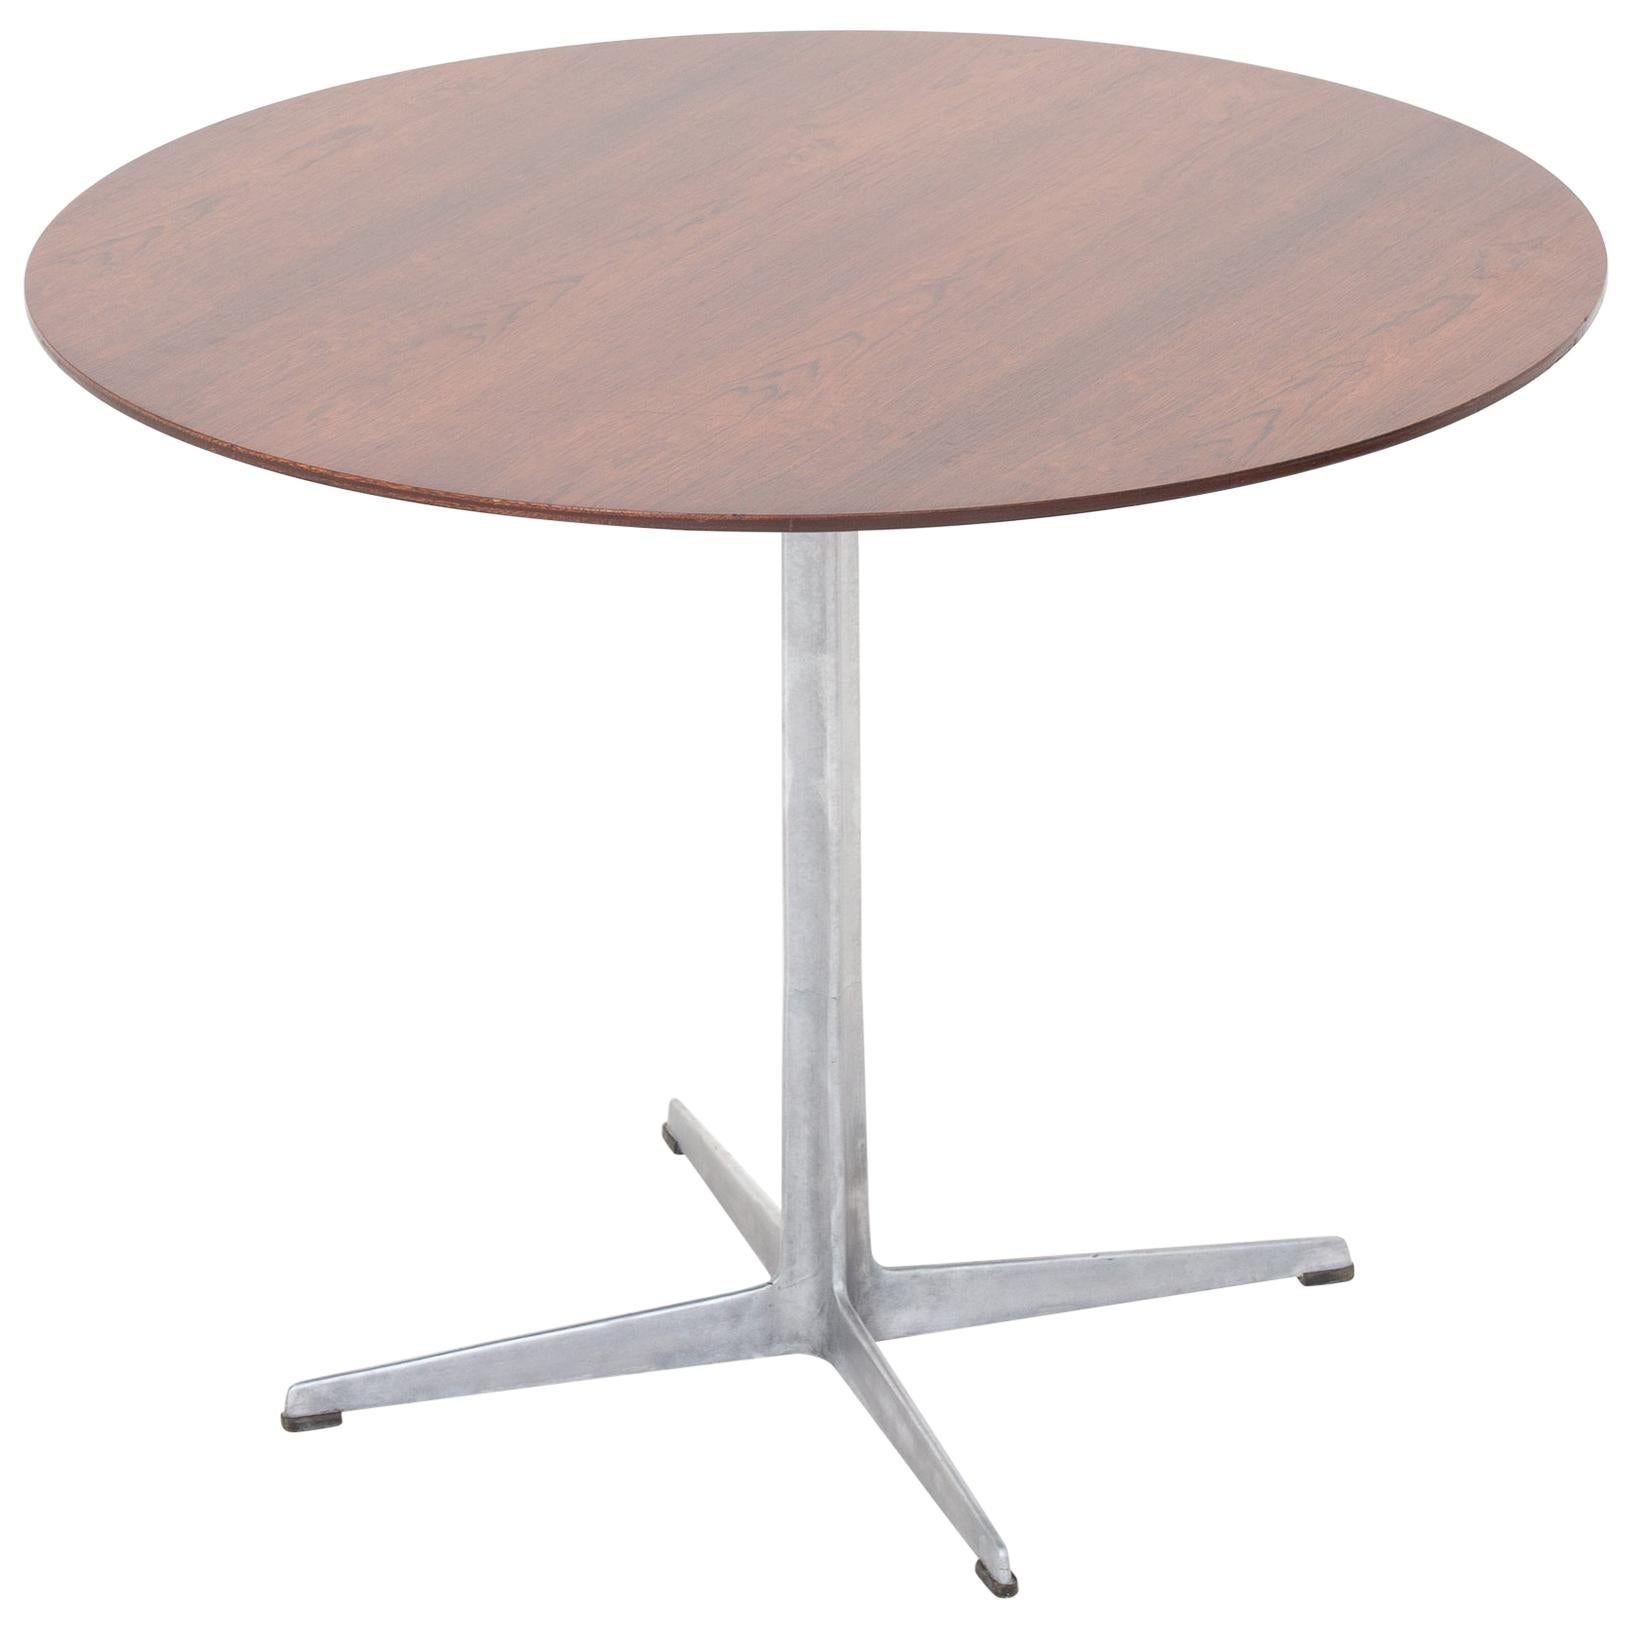 Café Table by Arne Jacobsen